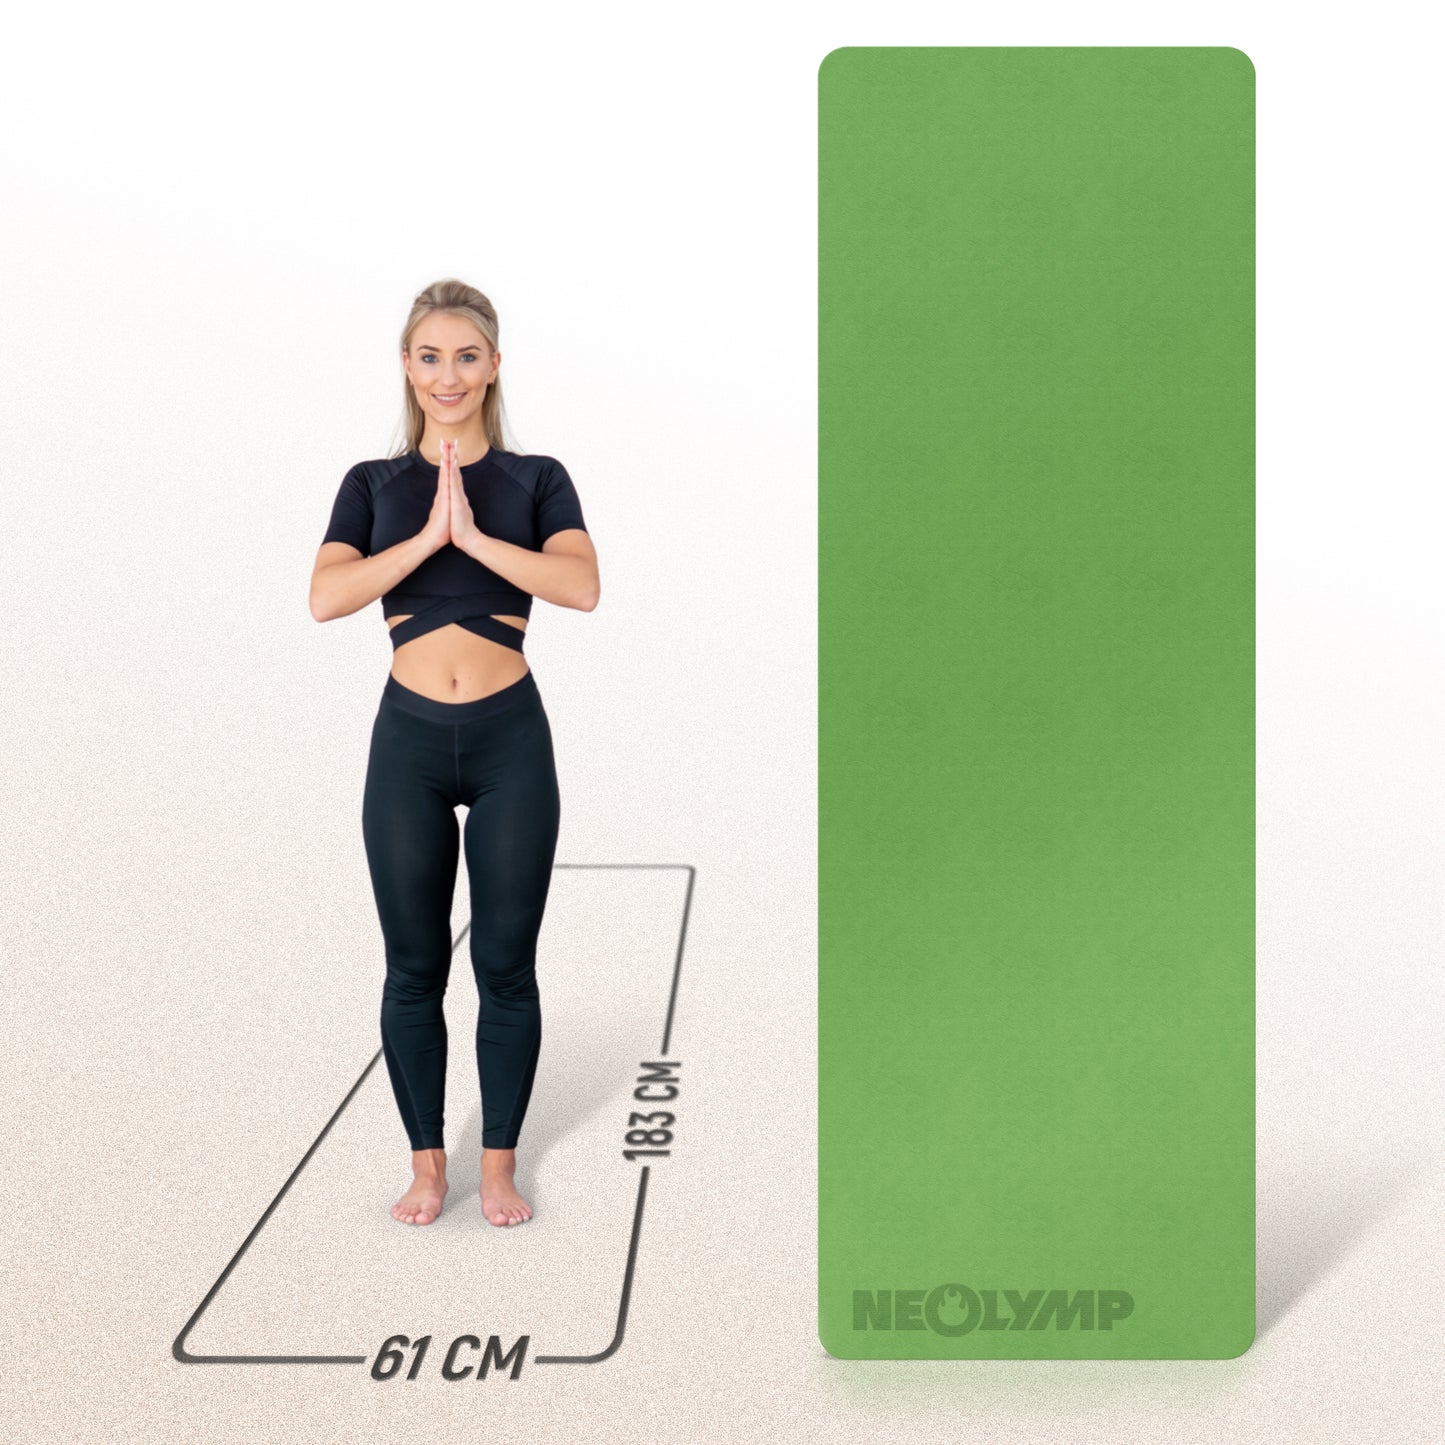 Premium Yogamatte – ideal für Yoga, Pilates & Gymnastik